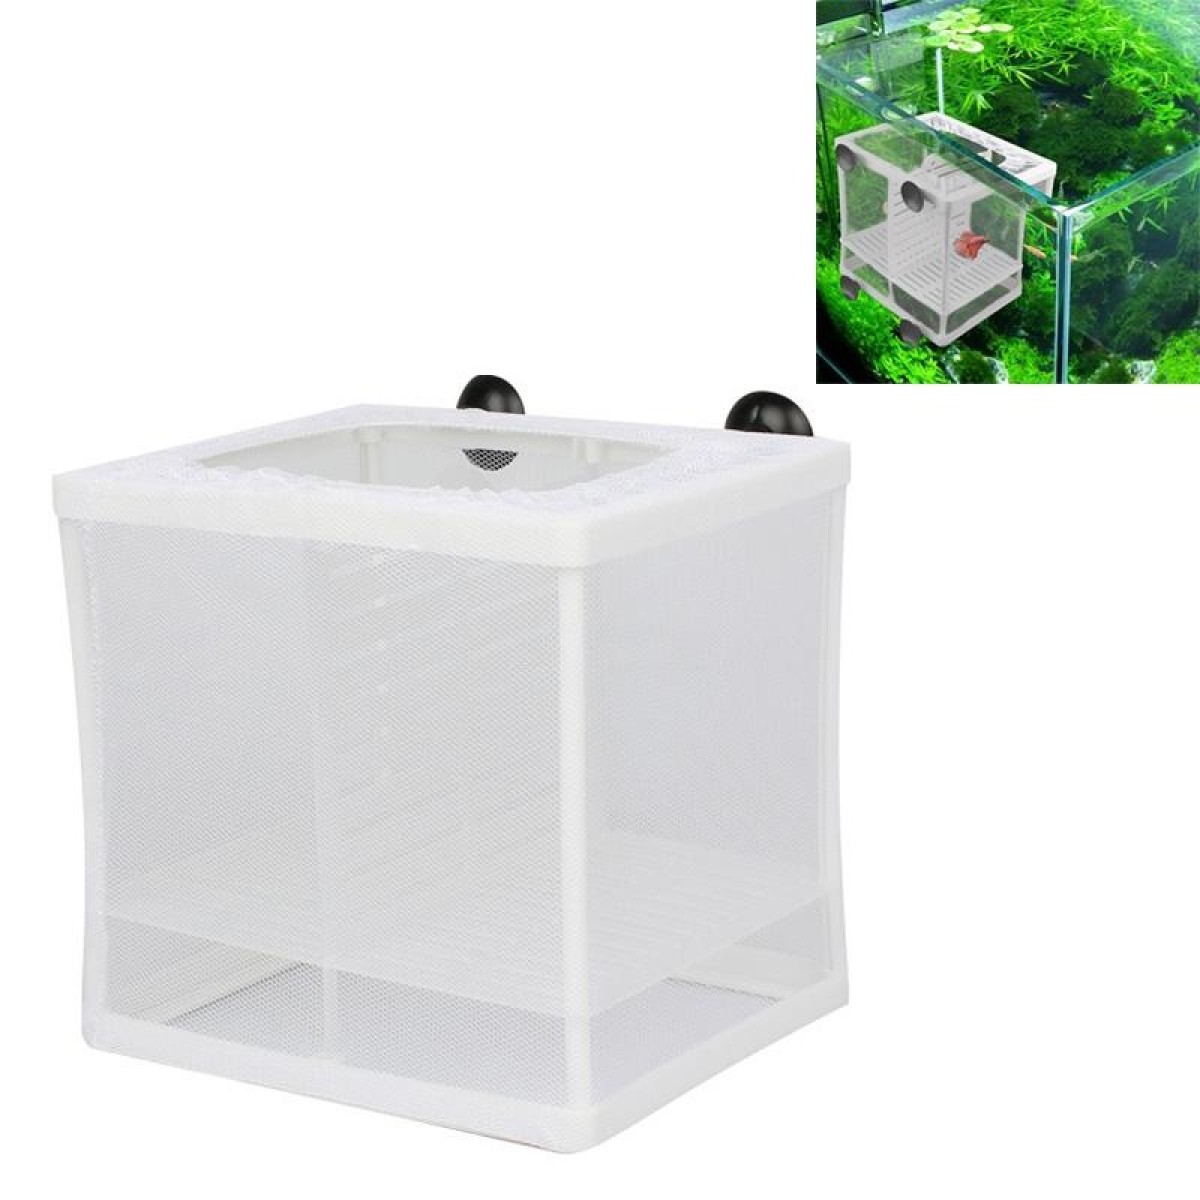 Small Size With Clapboard Incubator Small Fish Isolation Box Net Tropical Fish Breeding Box